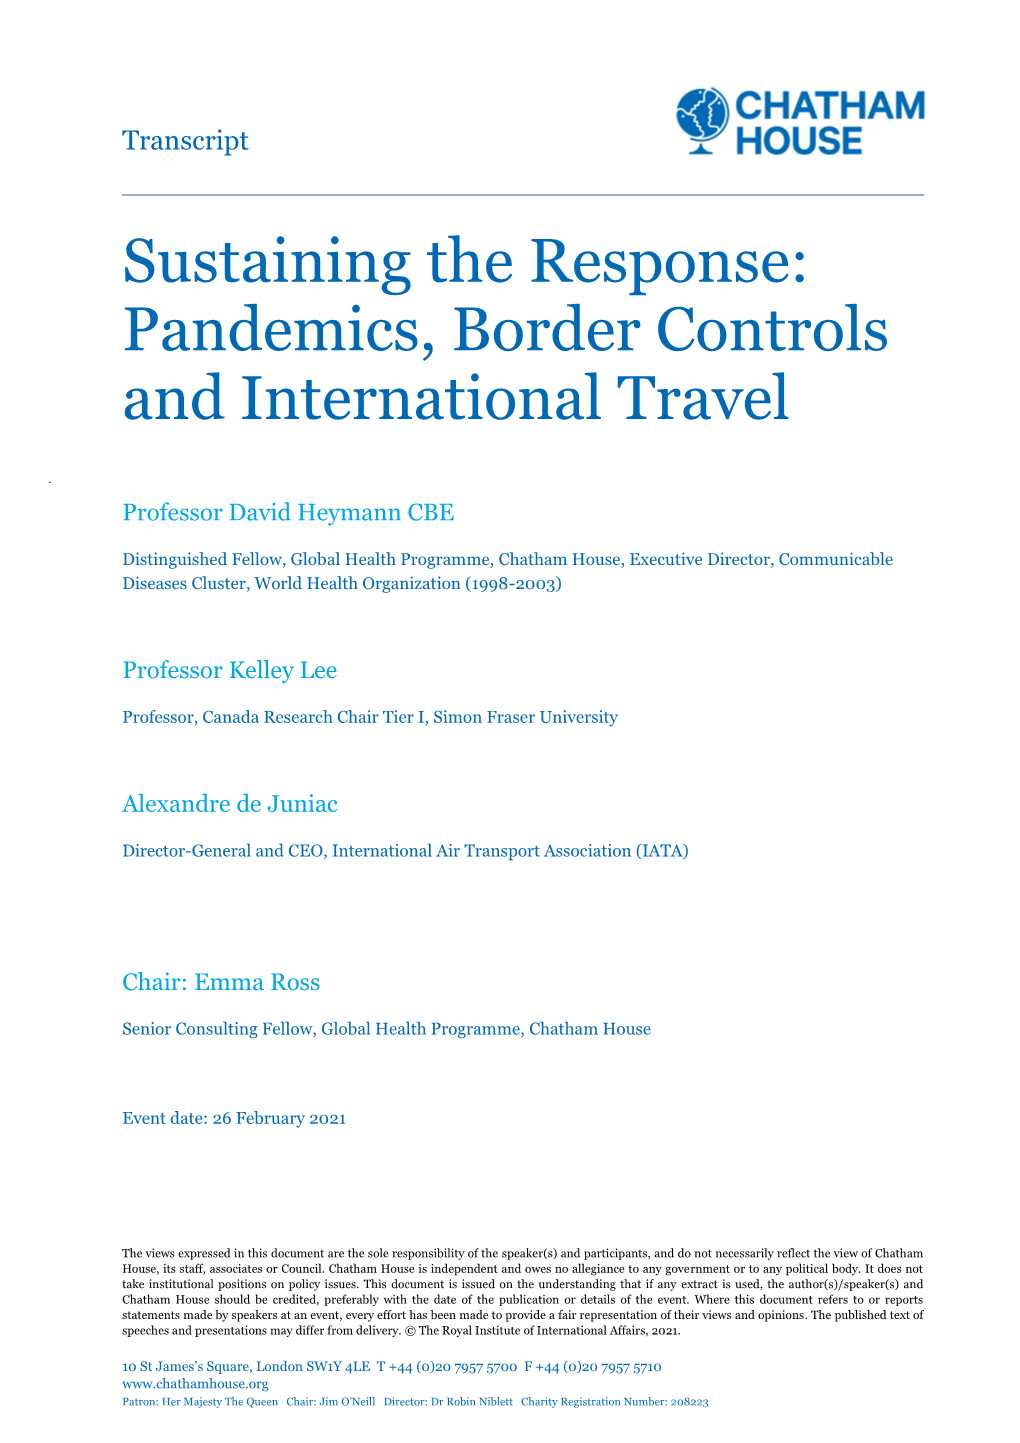 Sustaining the Response: Pandemics, Border Controls and International Travel